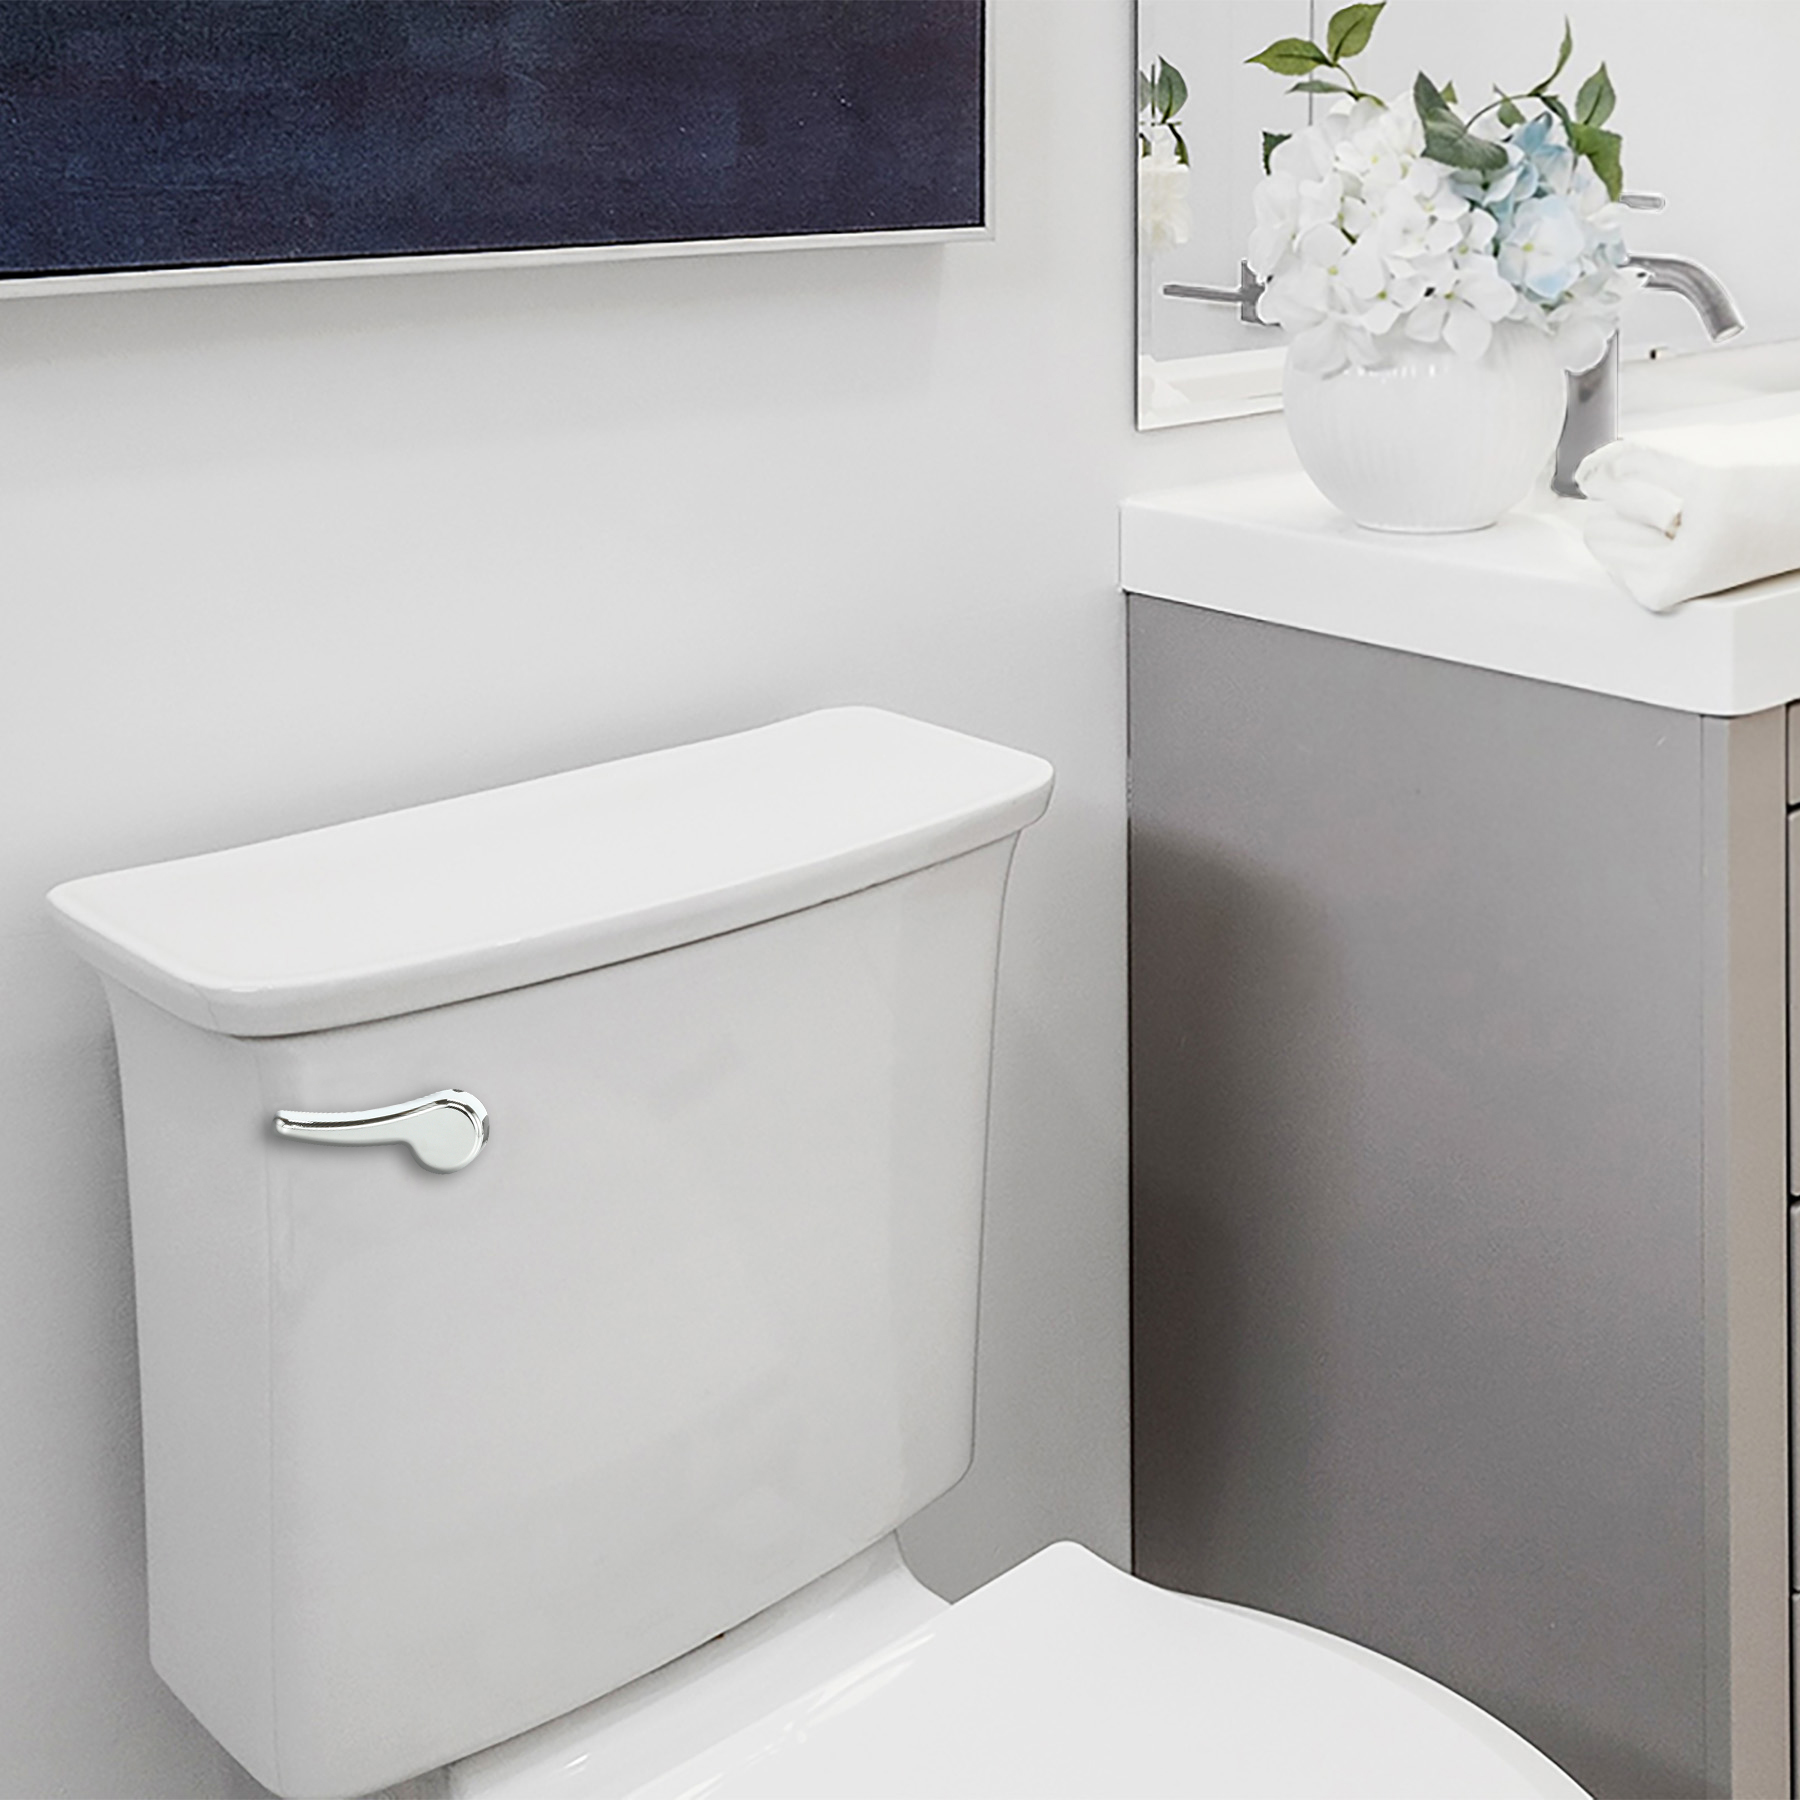 bathroom featuring the korky chrome toilet flush handle